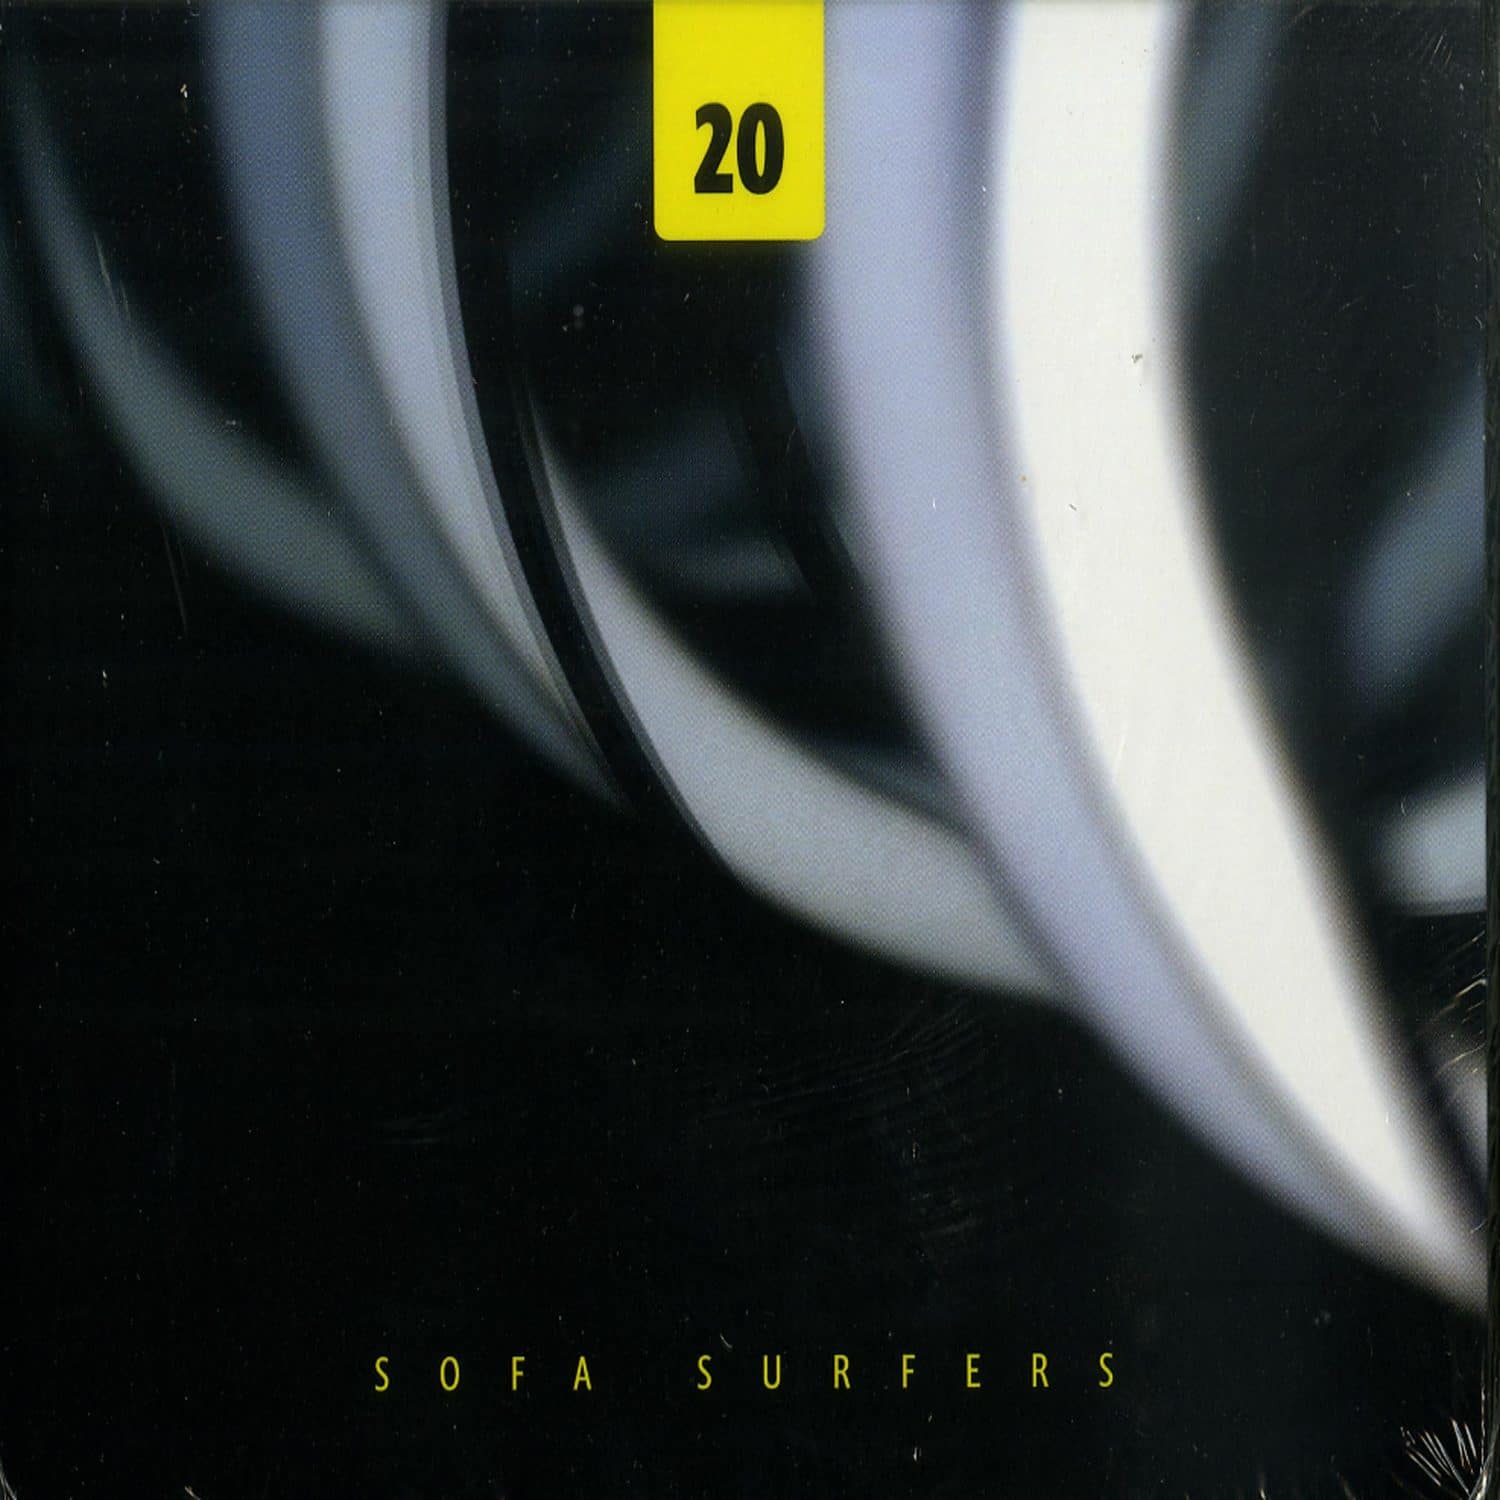 Sofa Surfers - 20 